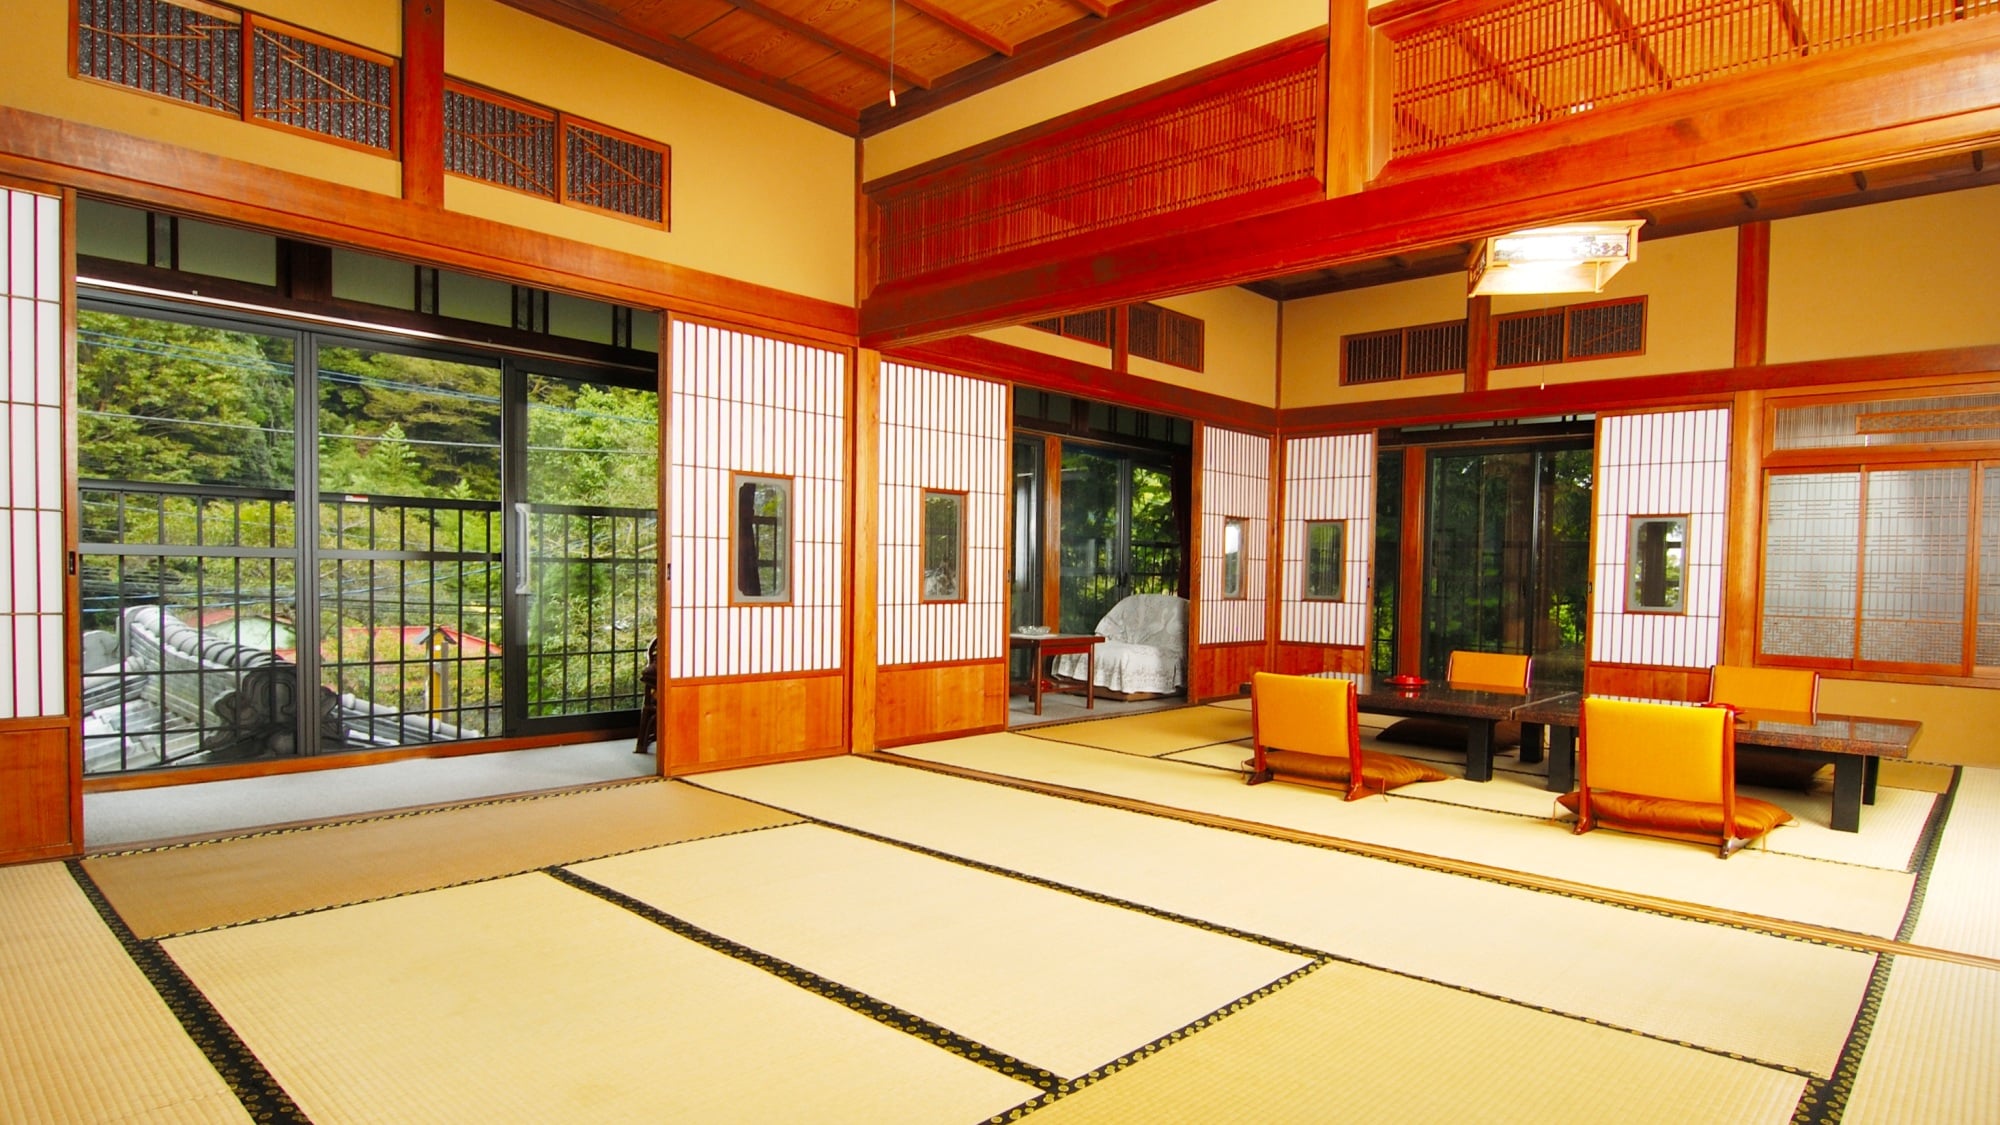 Japanese-style room 20 tatami mats